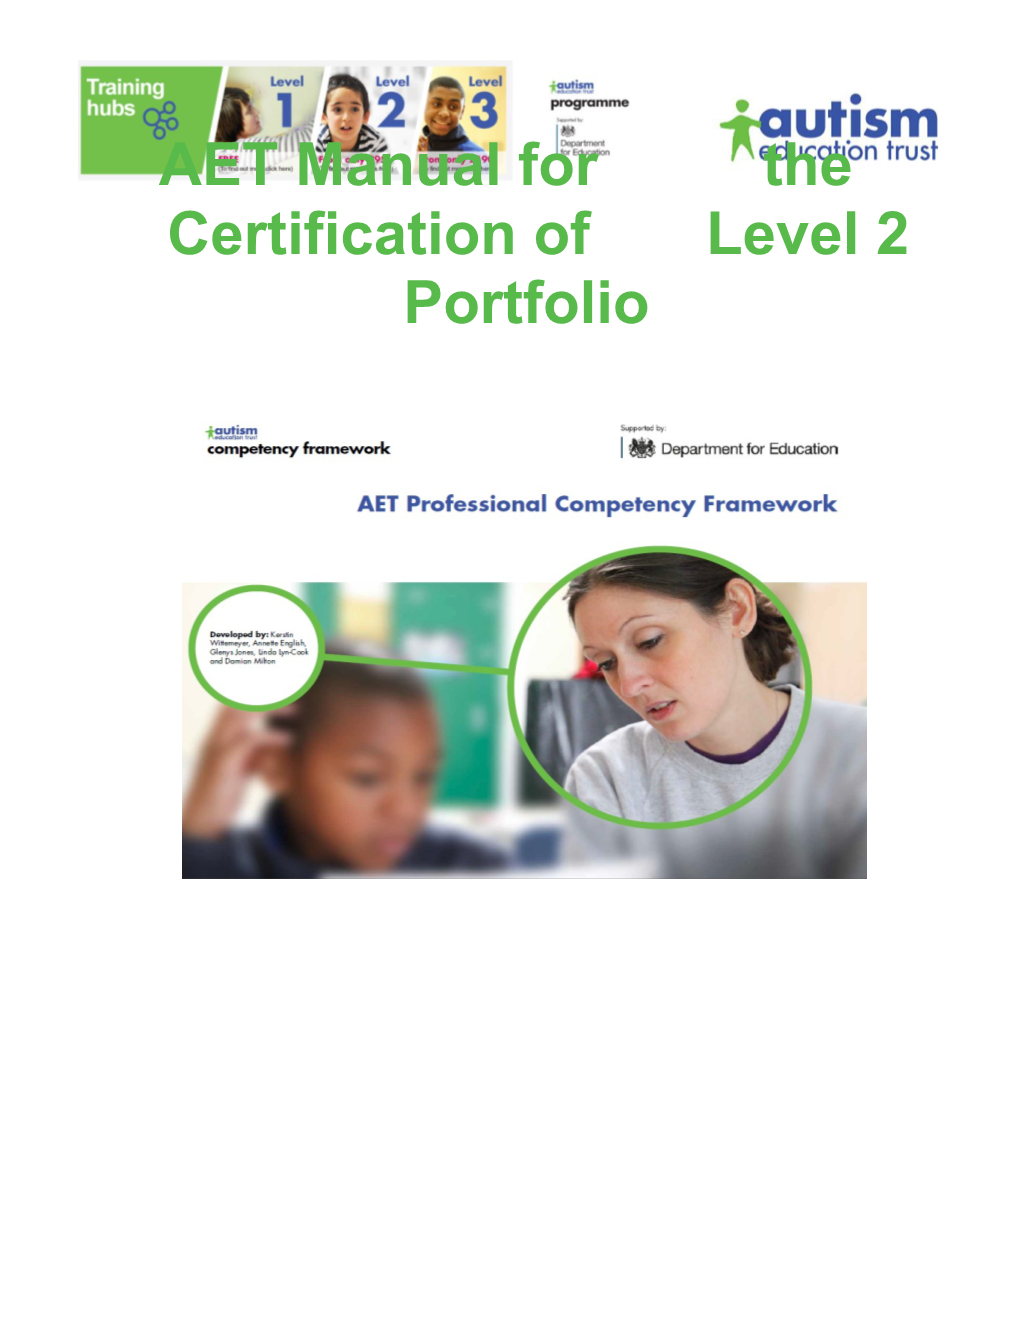 AET Manual for the Certification of Level 2 Portfolio